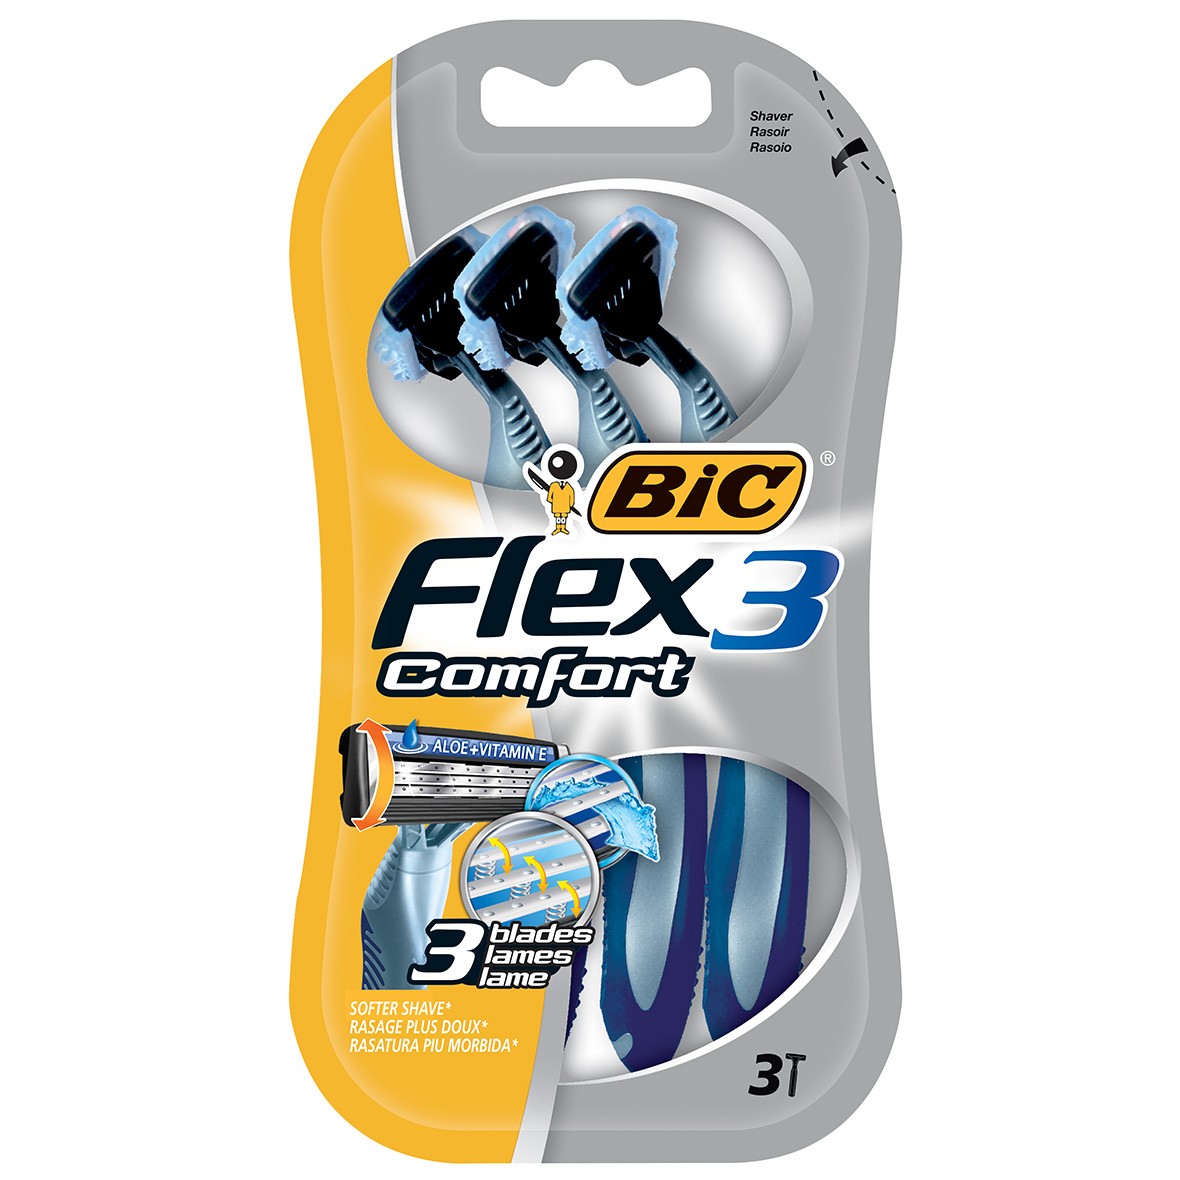    3  / Bic Flex 3 Comfort -     3 